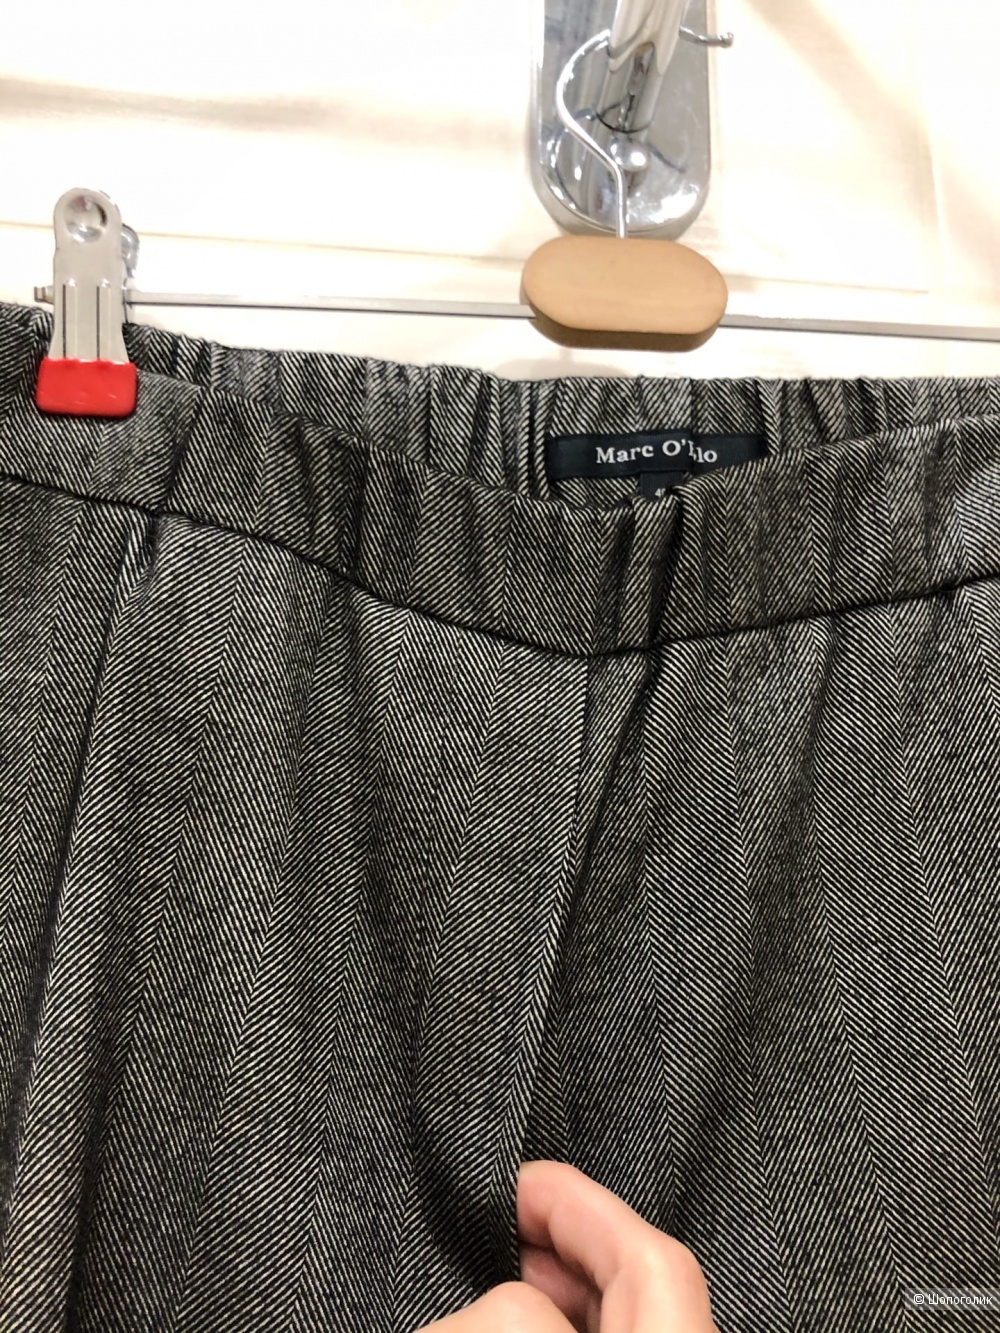 Шерстяные брюки  Marc O'Polo.Размер L-XL.